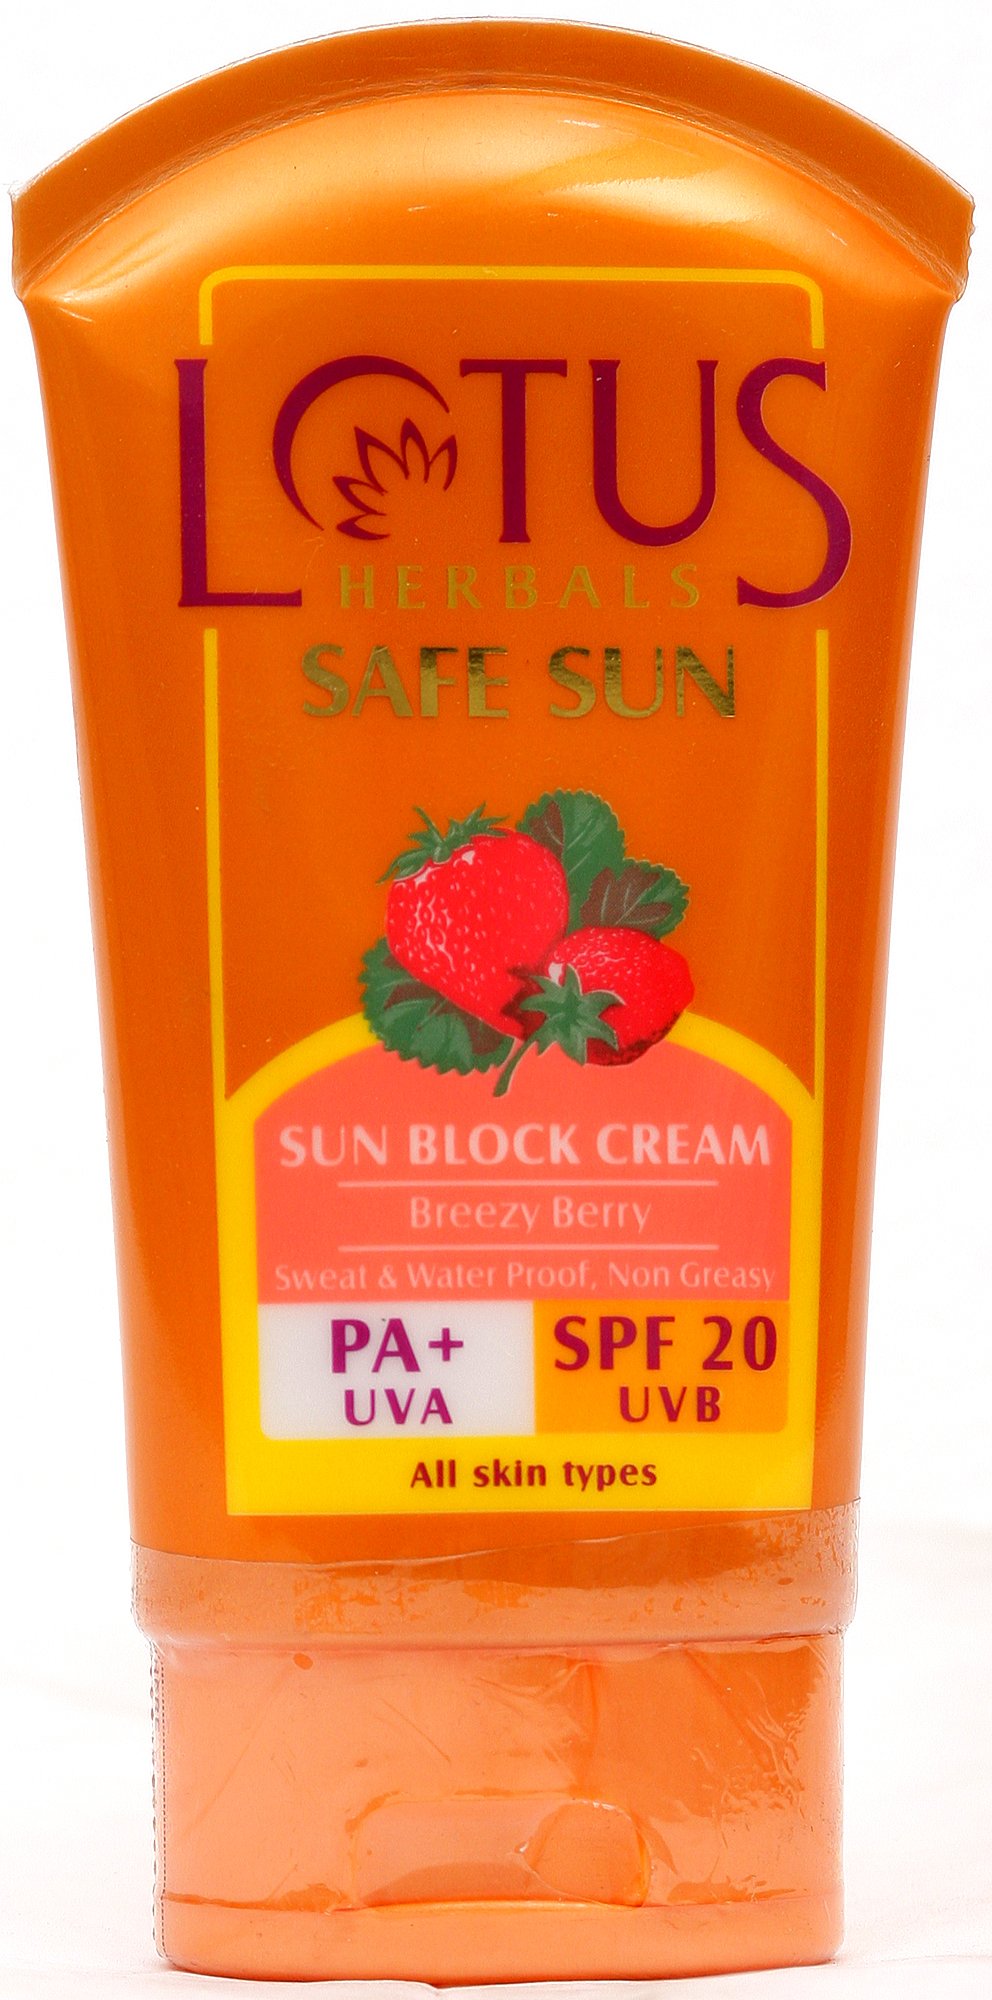 Lotus Herbals Safe Sun Block Cream - book cover